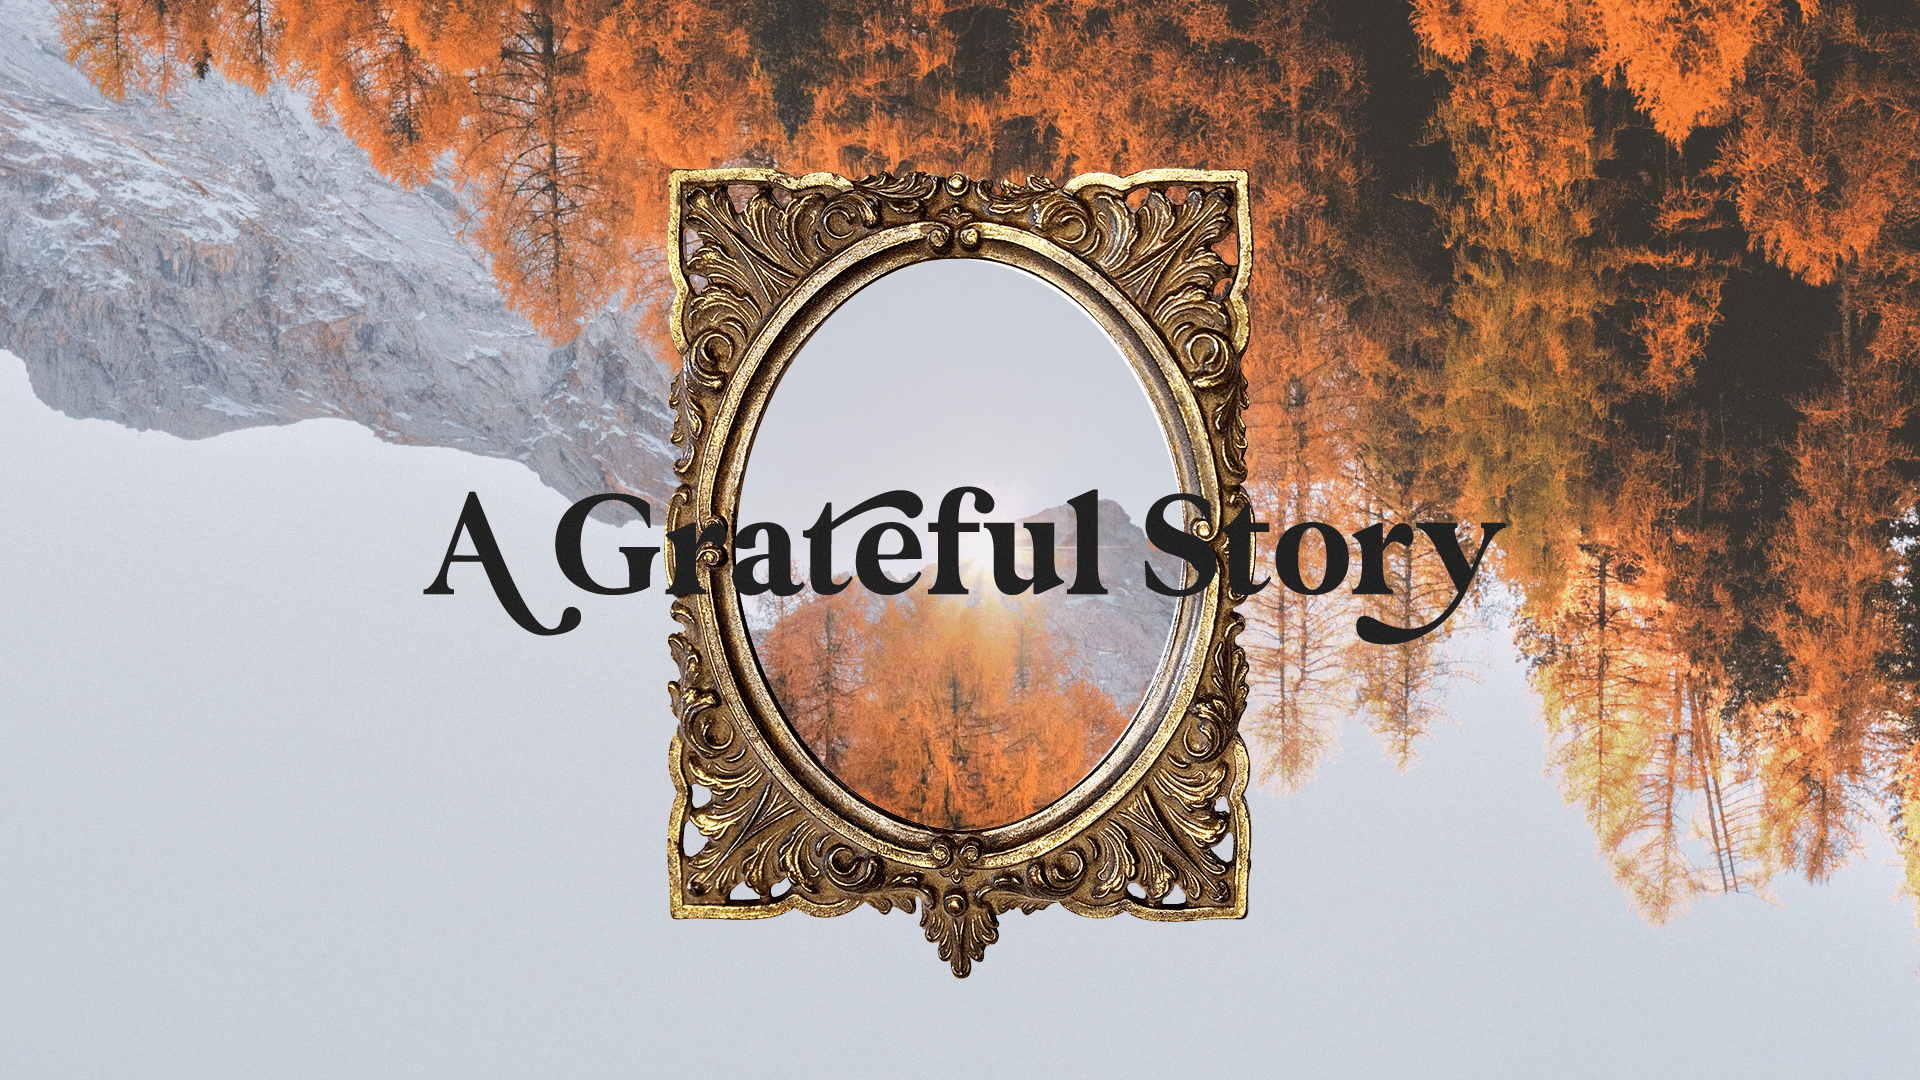 A-grateful-story-1920x1080